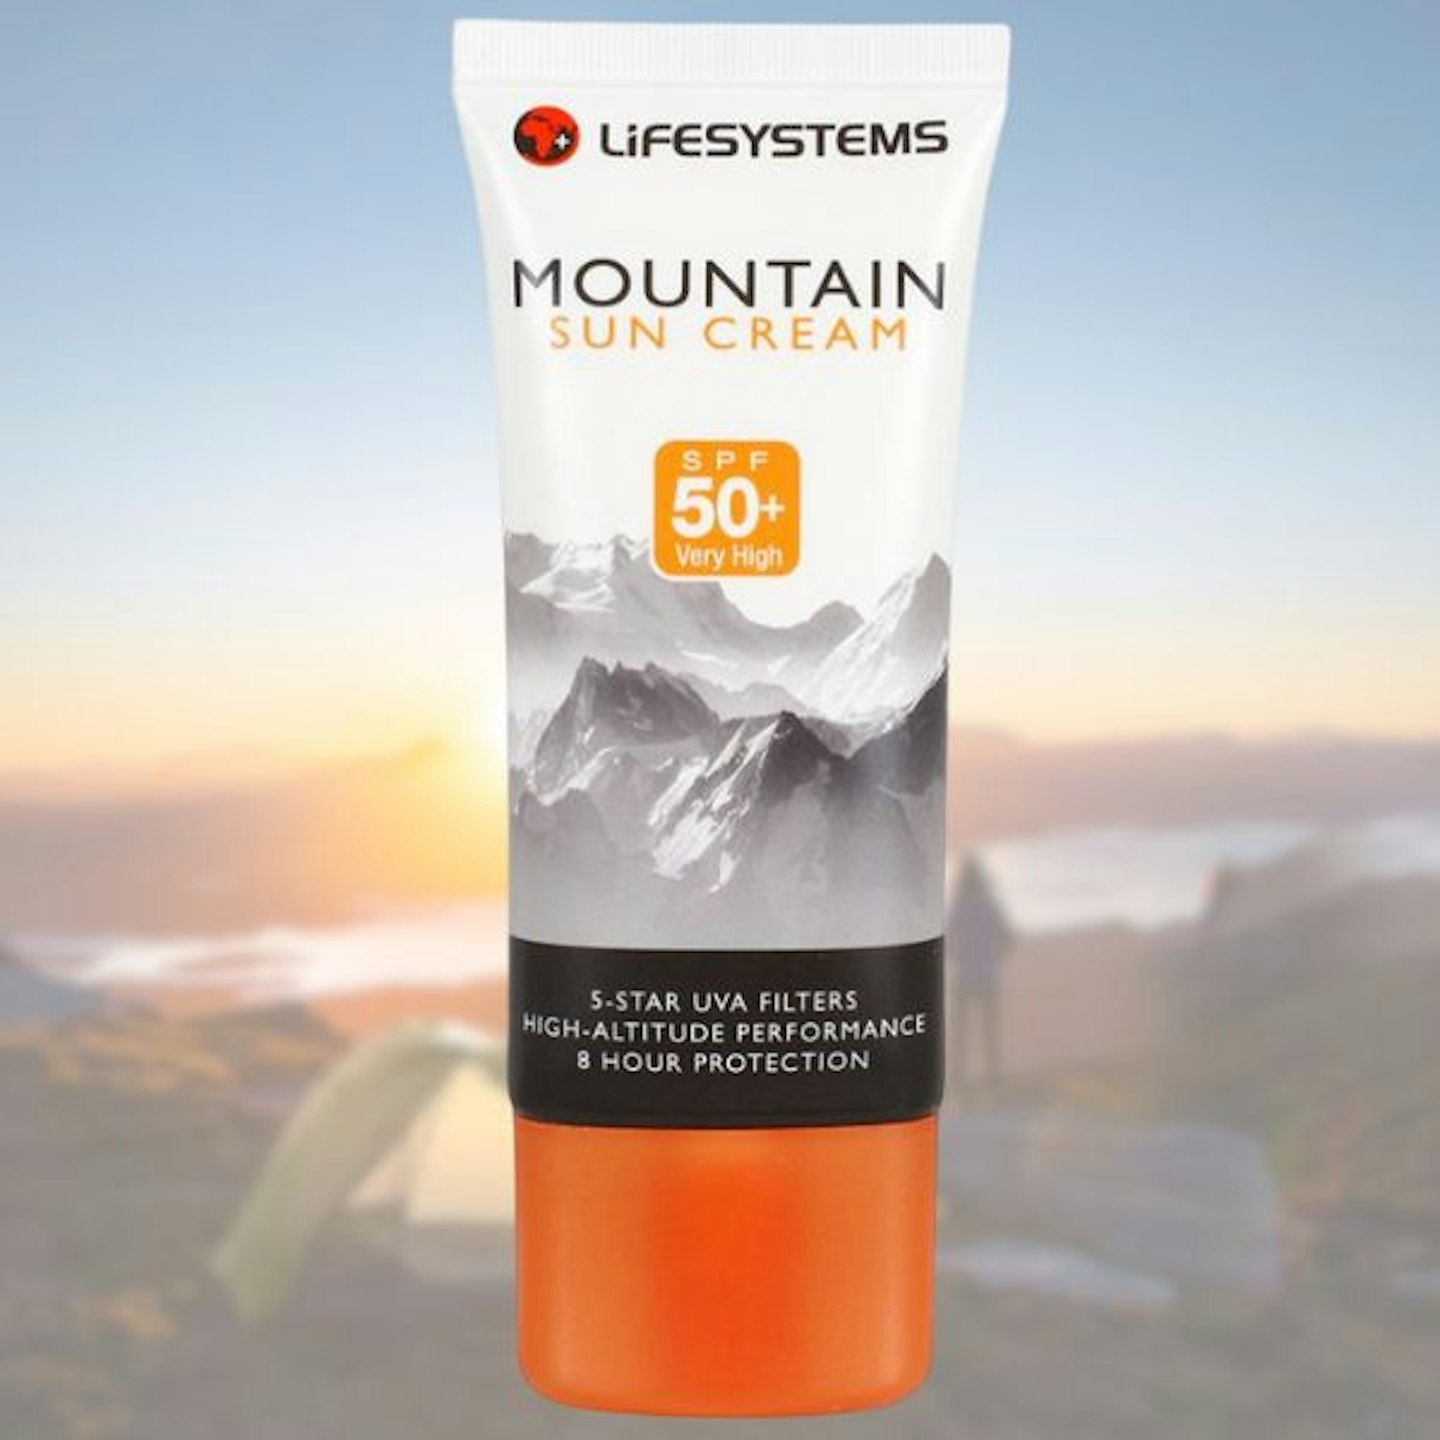 Lifesystems Mountain Sun Cream SPF50+